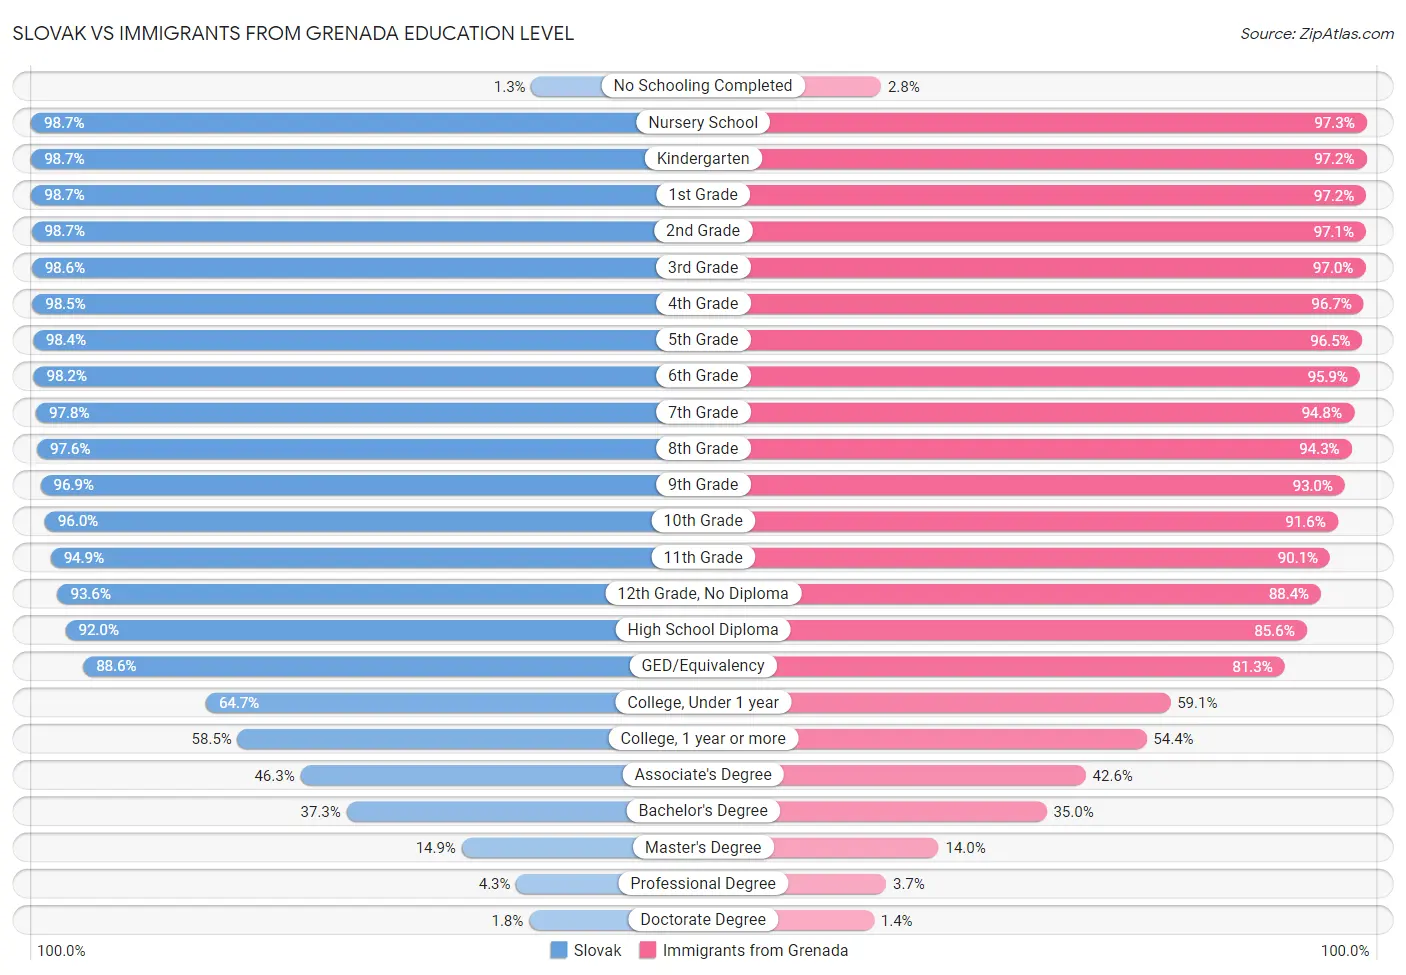 Slovak vs Immigrants from Grenada Education Level